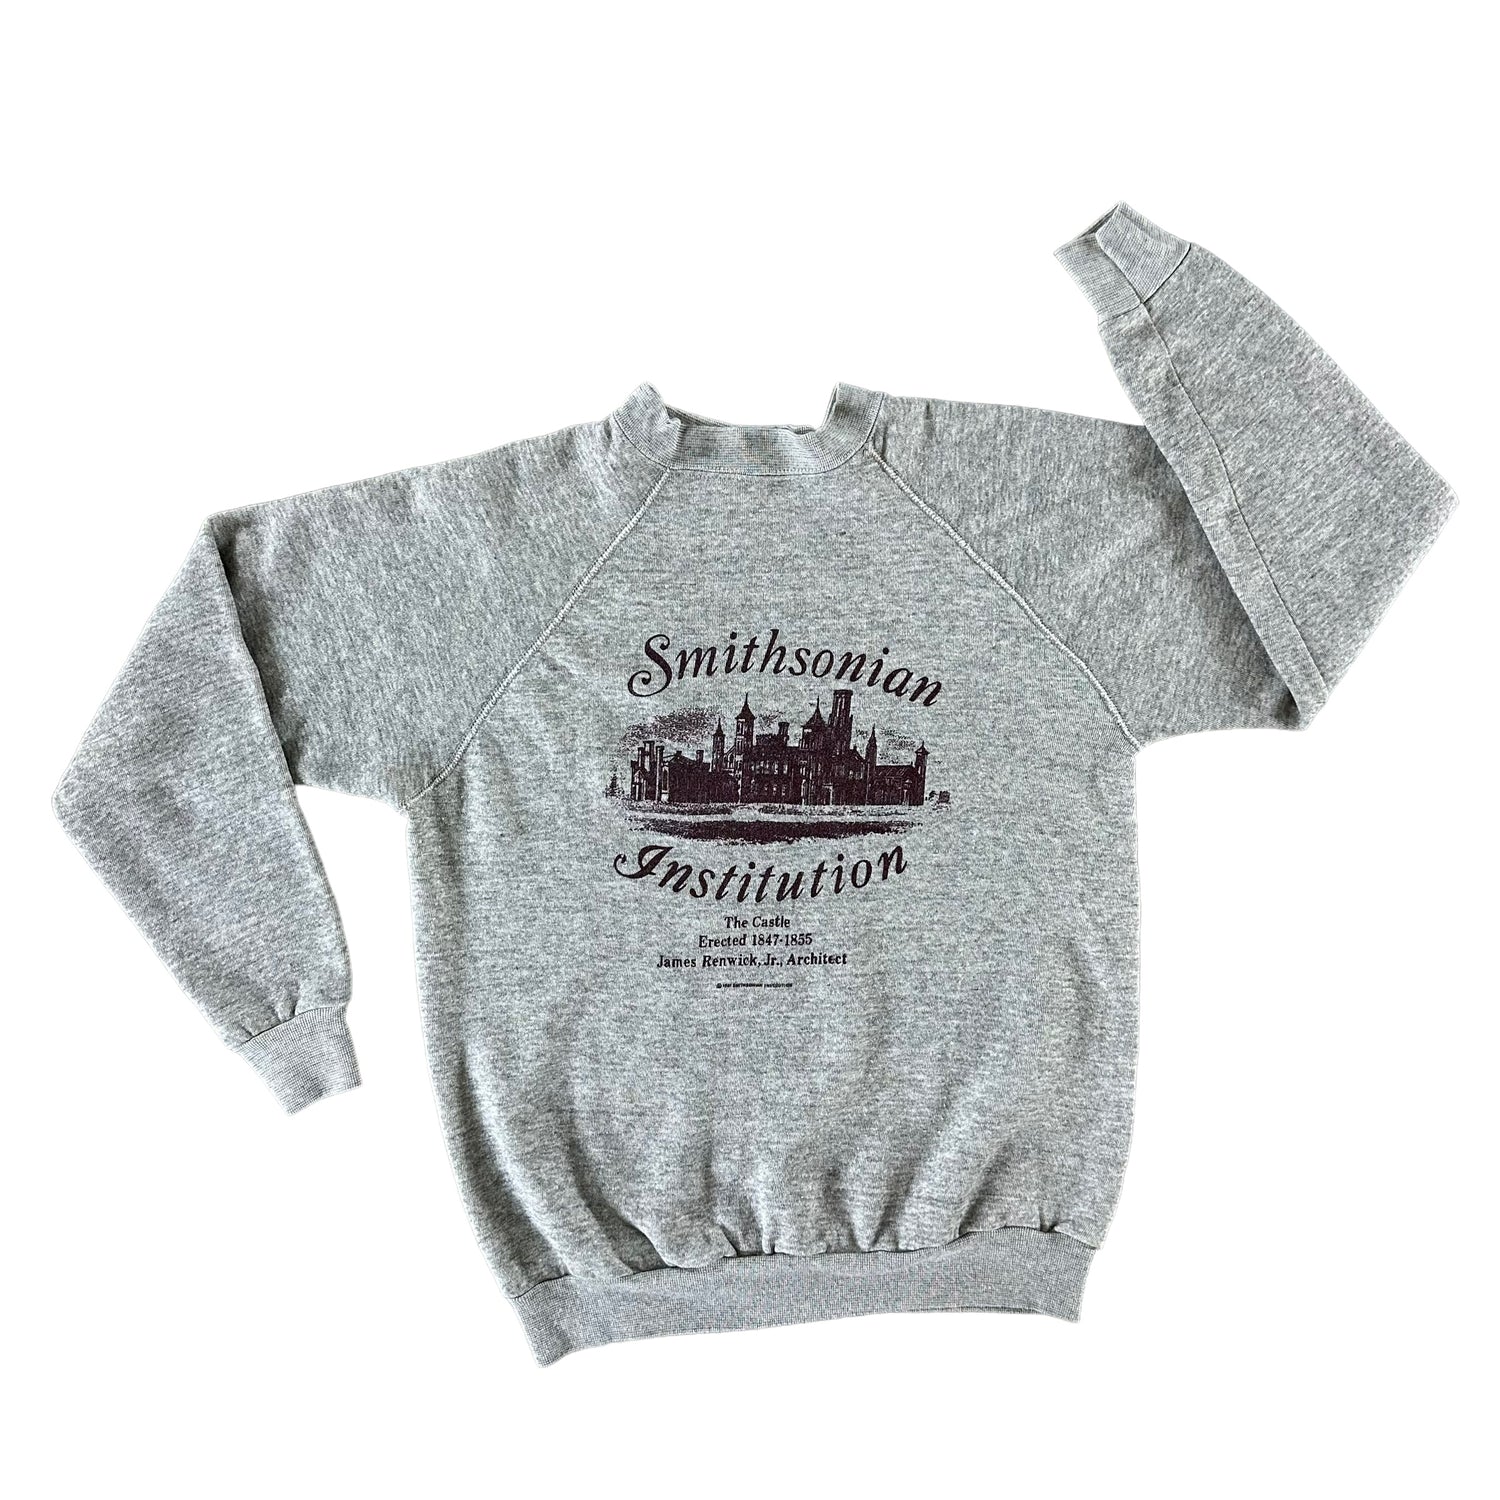 Vintage 1981 Smithsonian Sweatshirt size Large